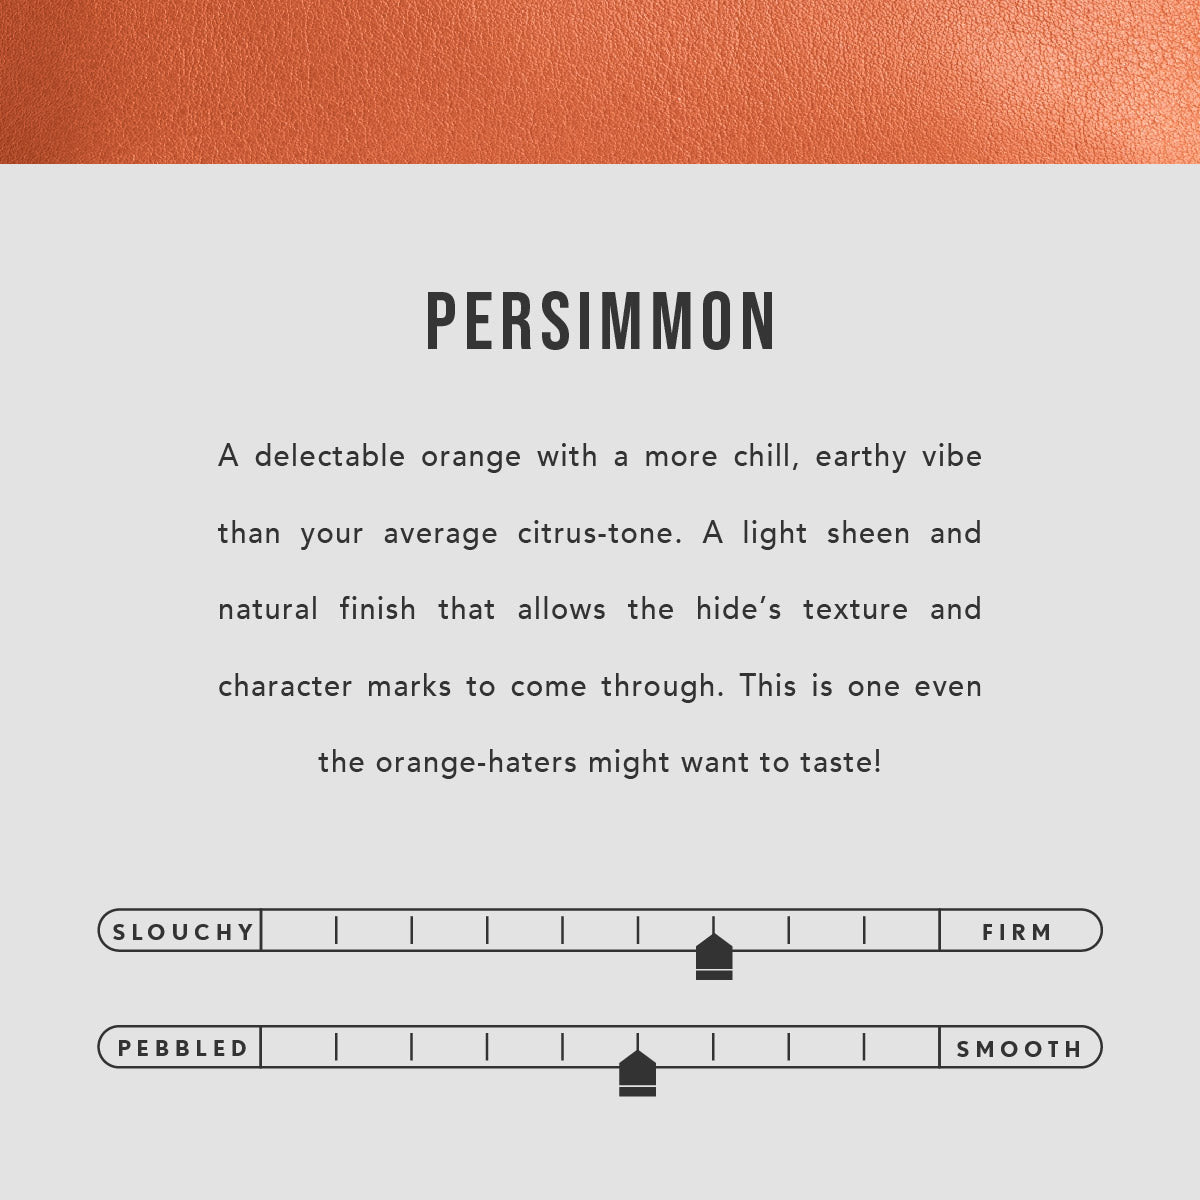 Persimmon | infographic